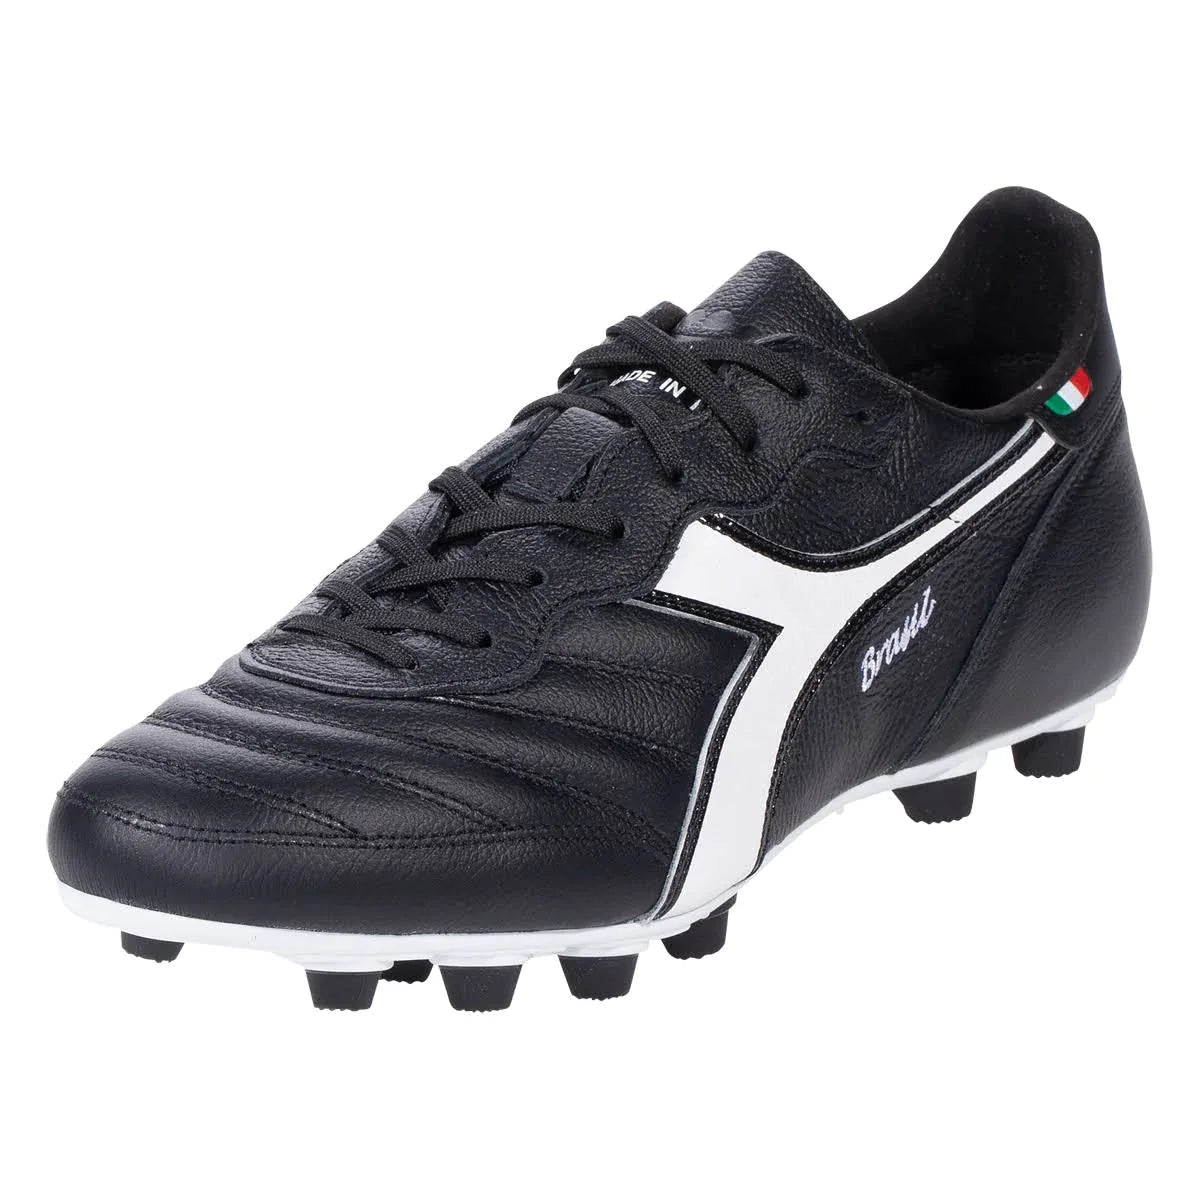 Diadora Brasil Italy OG LT+MDPU FG Firm Ground Football Boots Black/White